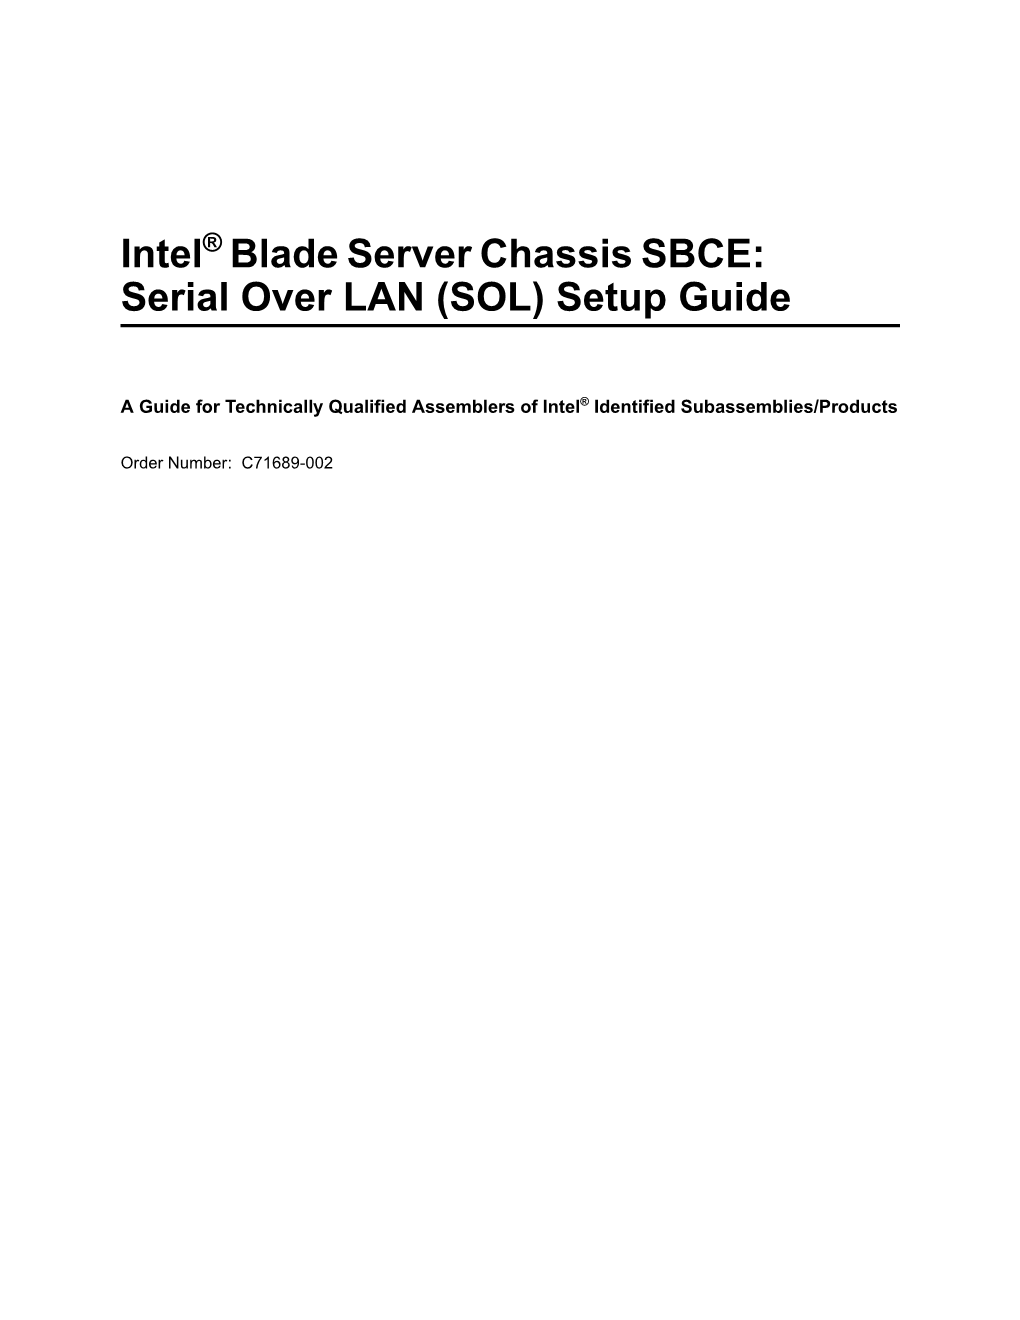 Blade Server Chassis SBCE: Serial Over LAN (SOL) Setup Guide